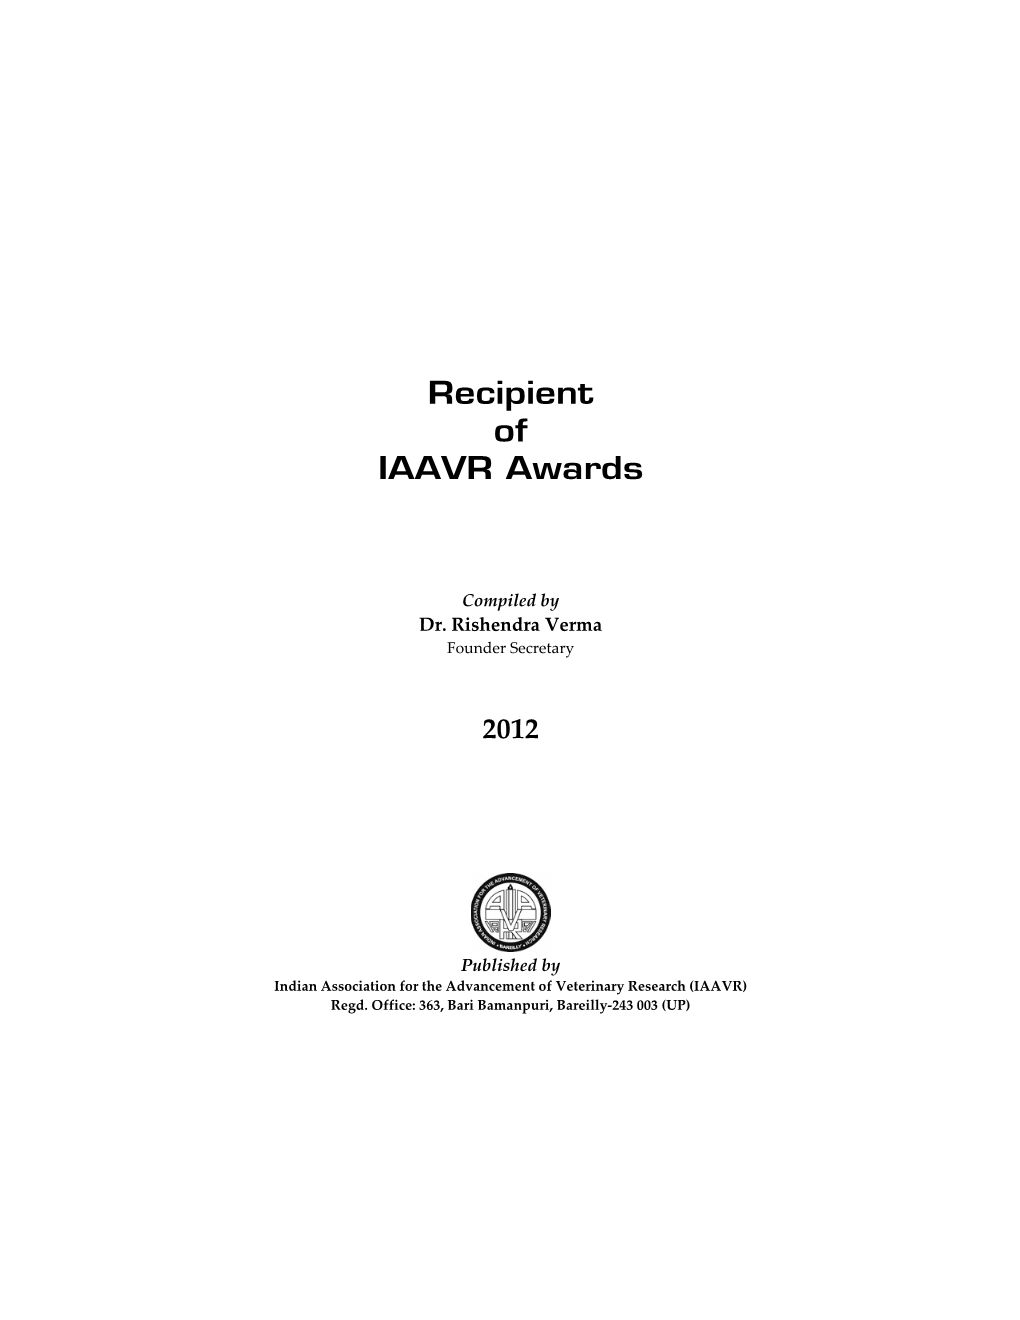 Recipient of IAAVR Awards